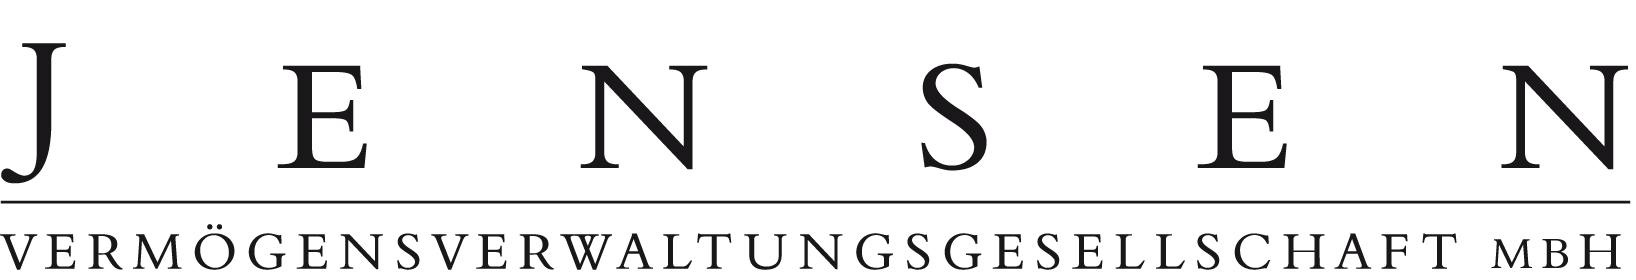 Logo for JENSEN Vermögensverwaltungsgesellschaft mbH & Co OHG